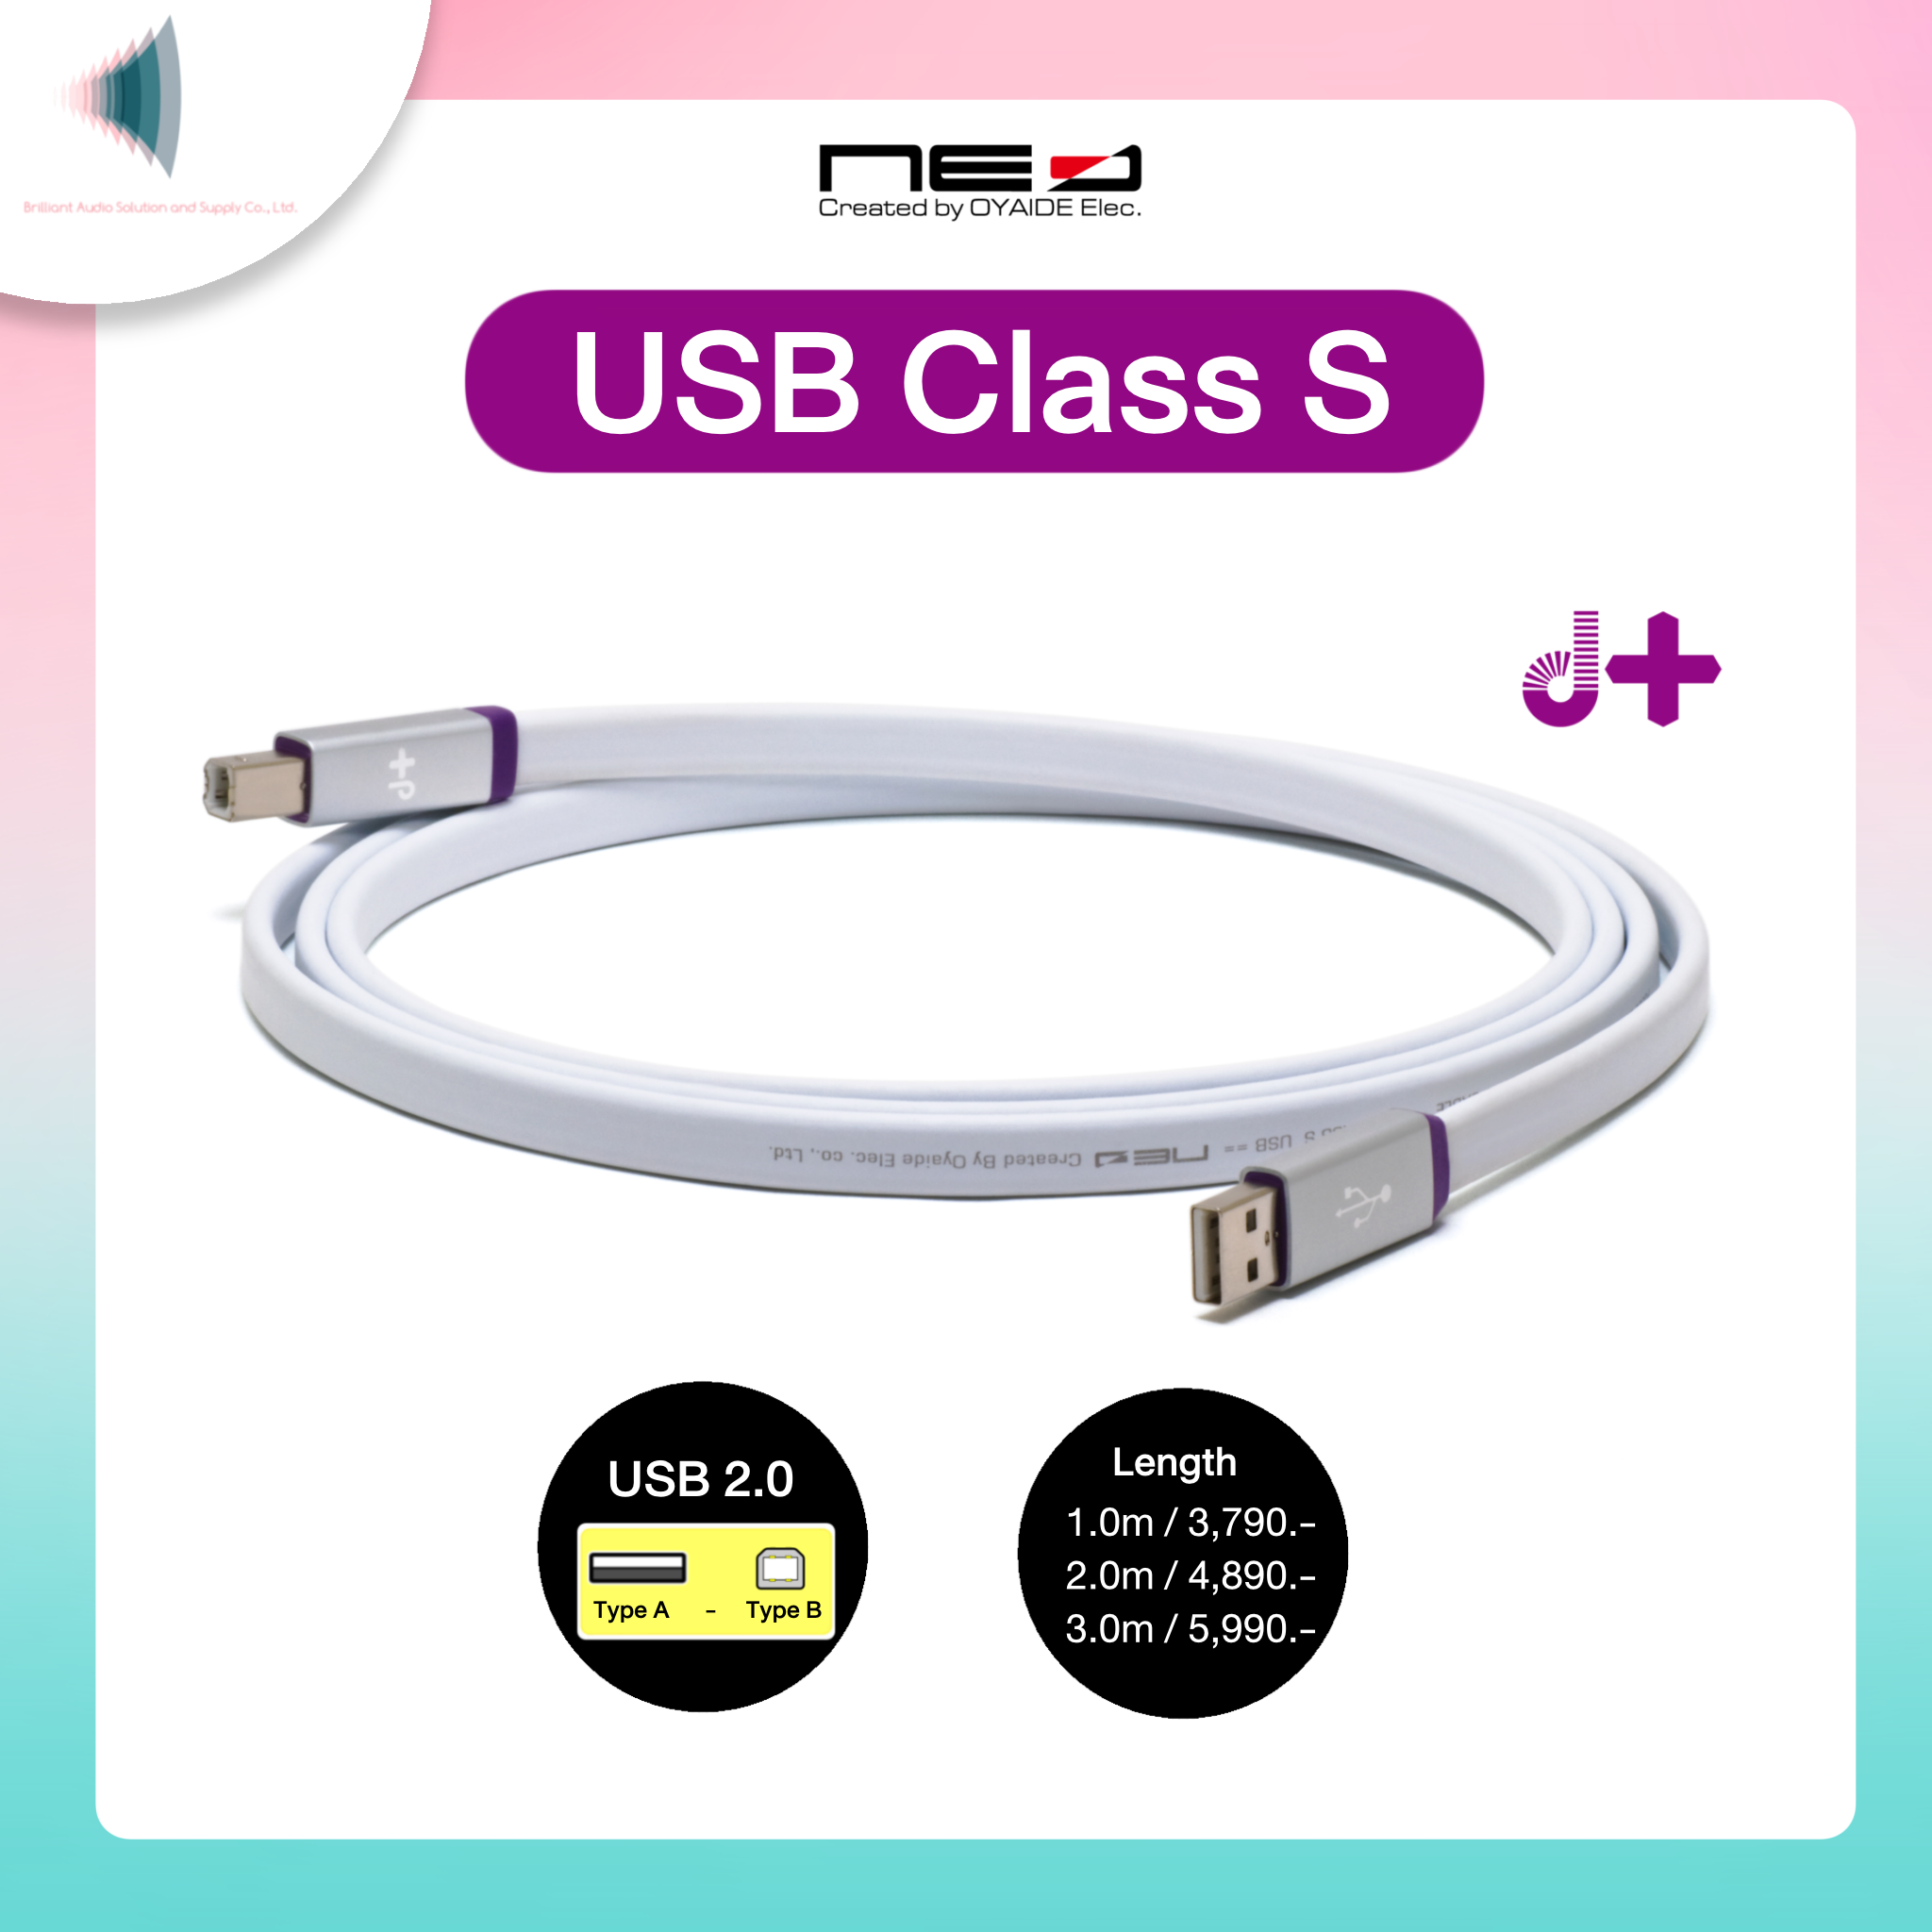 Oyaide d USB classS rev.2